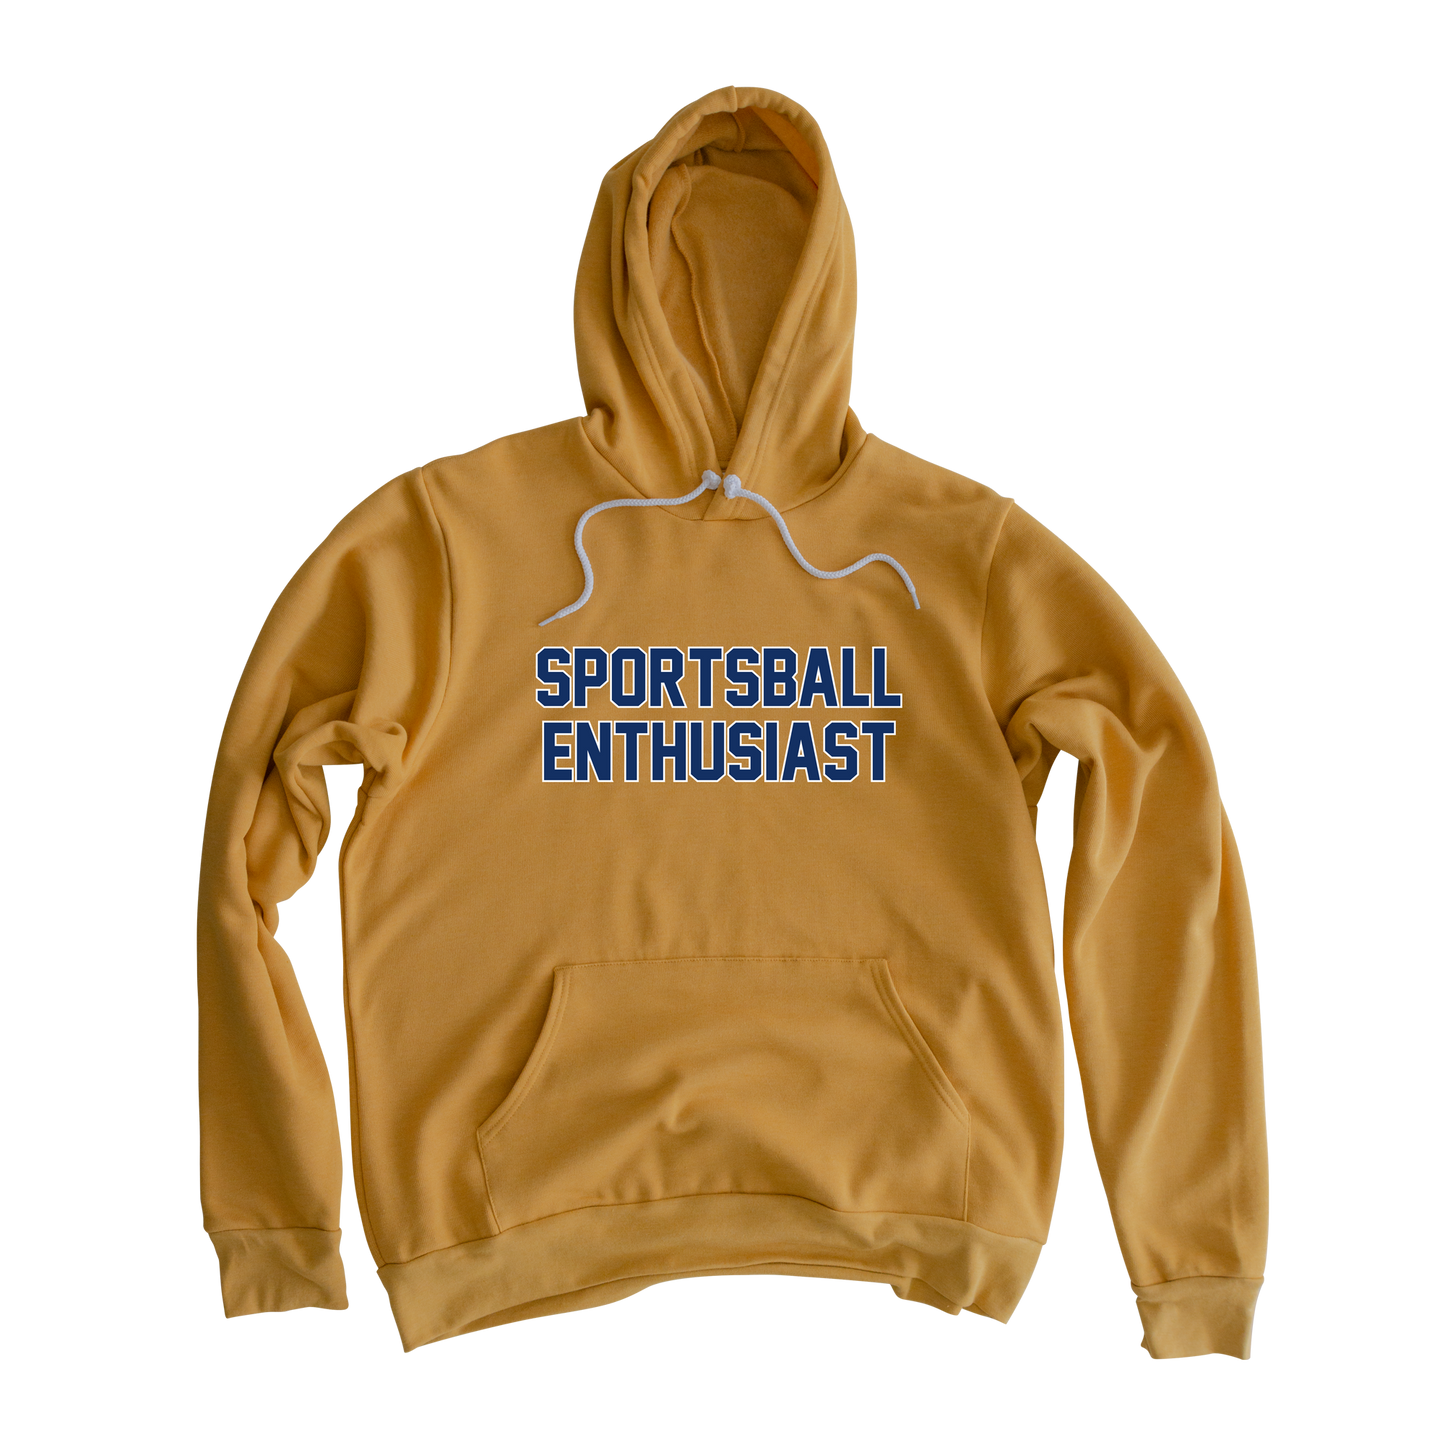 Sportsball Enthusiast Hooded Sweatshirt